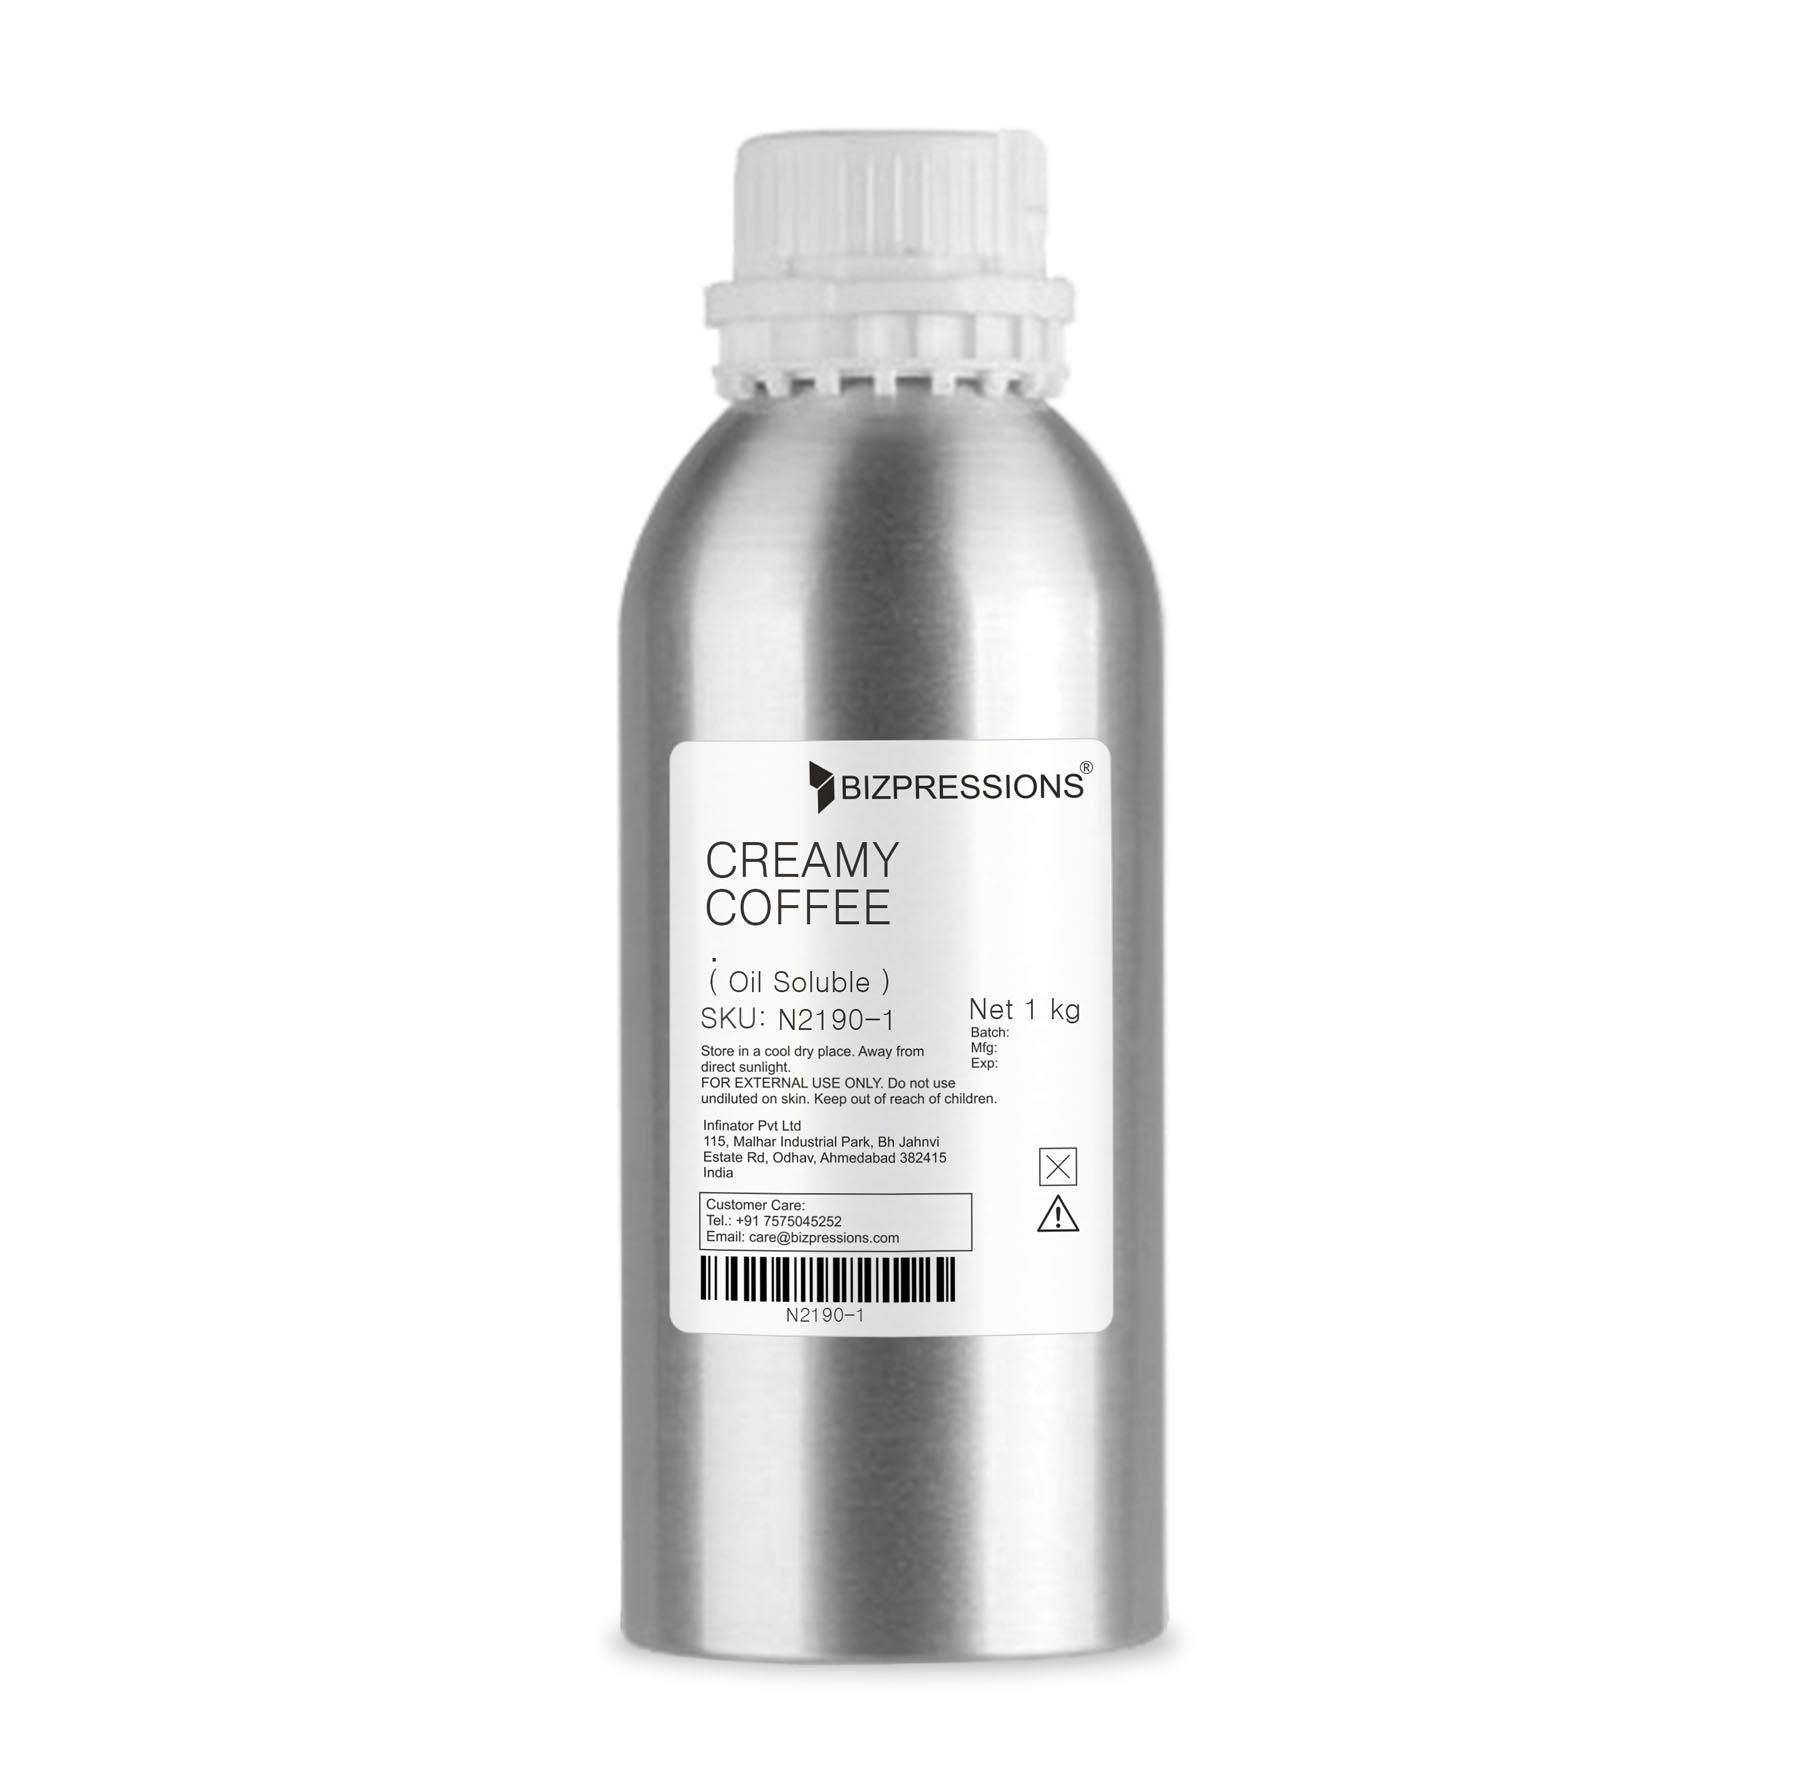 CREAMY COFFEE - Fragrance ( Oil Soluble ) - 1 kg